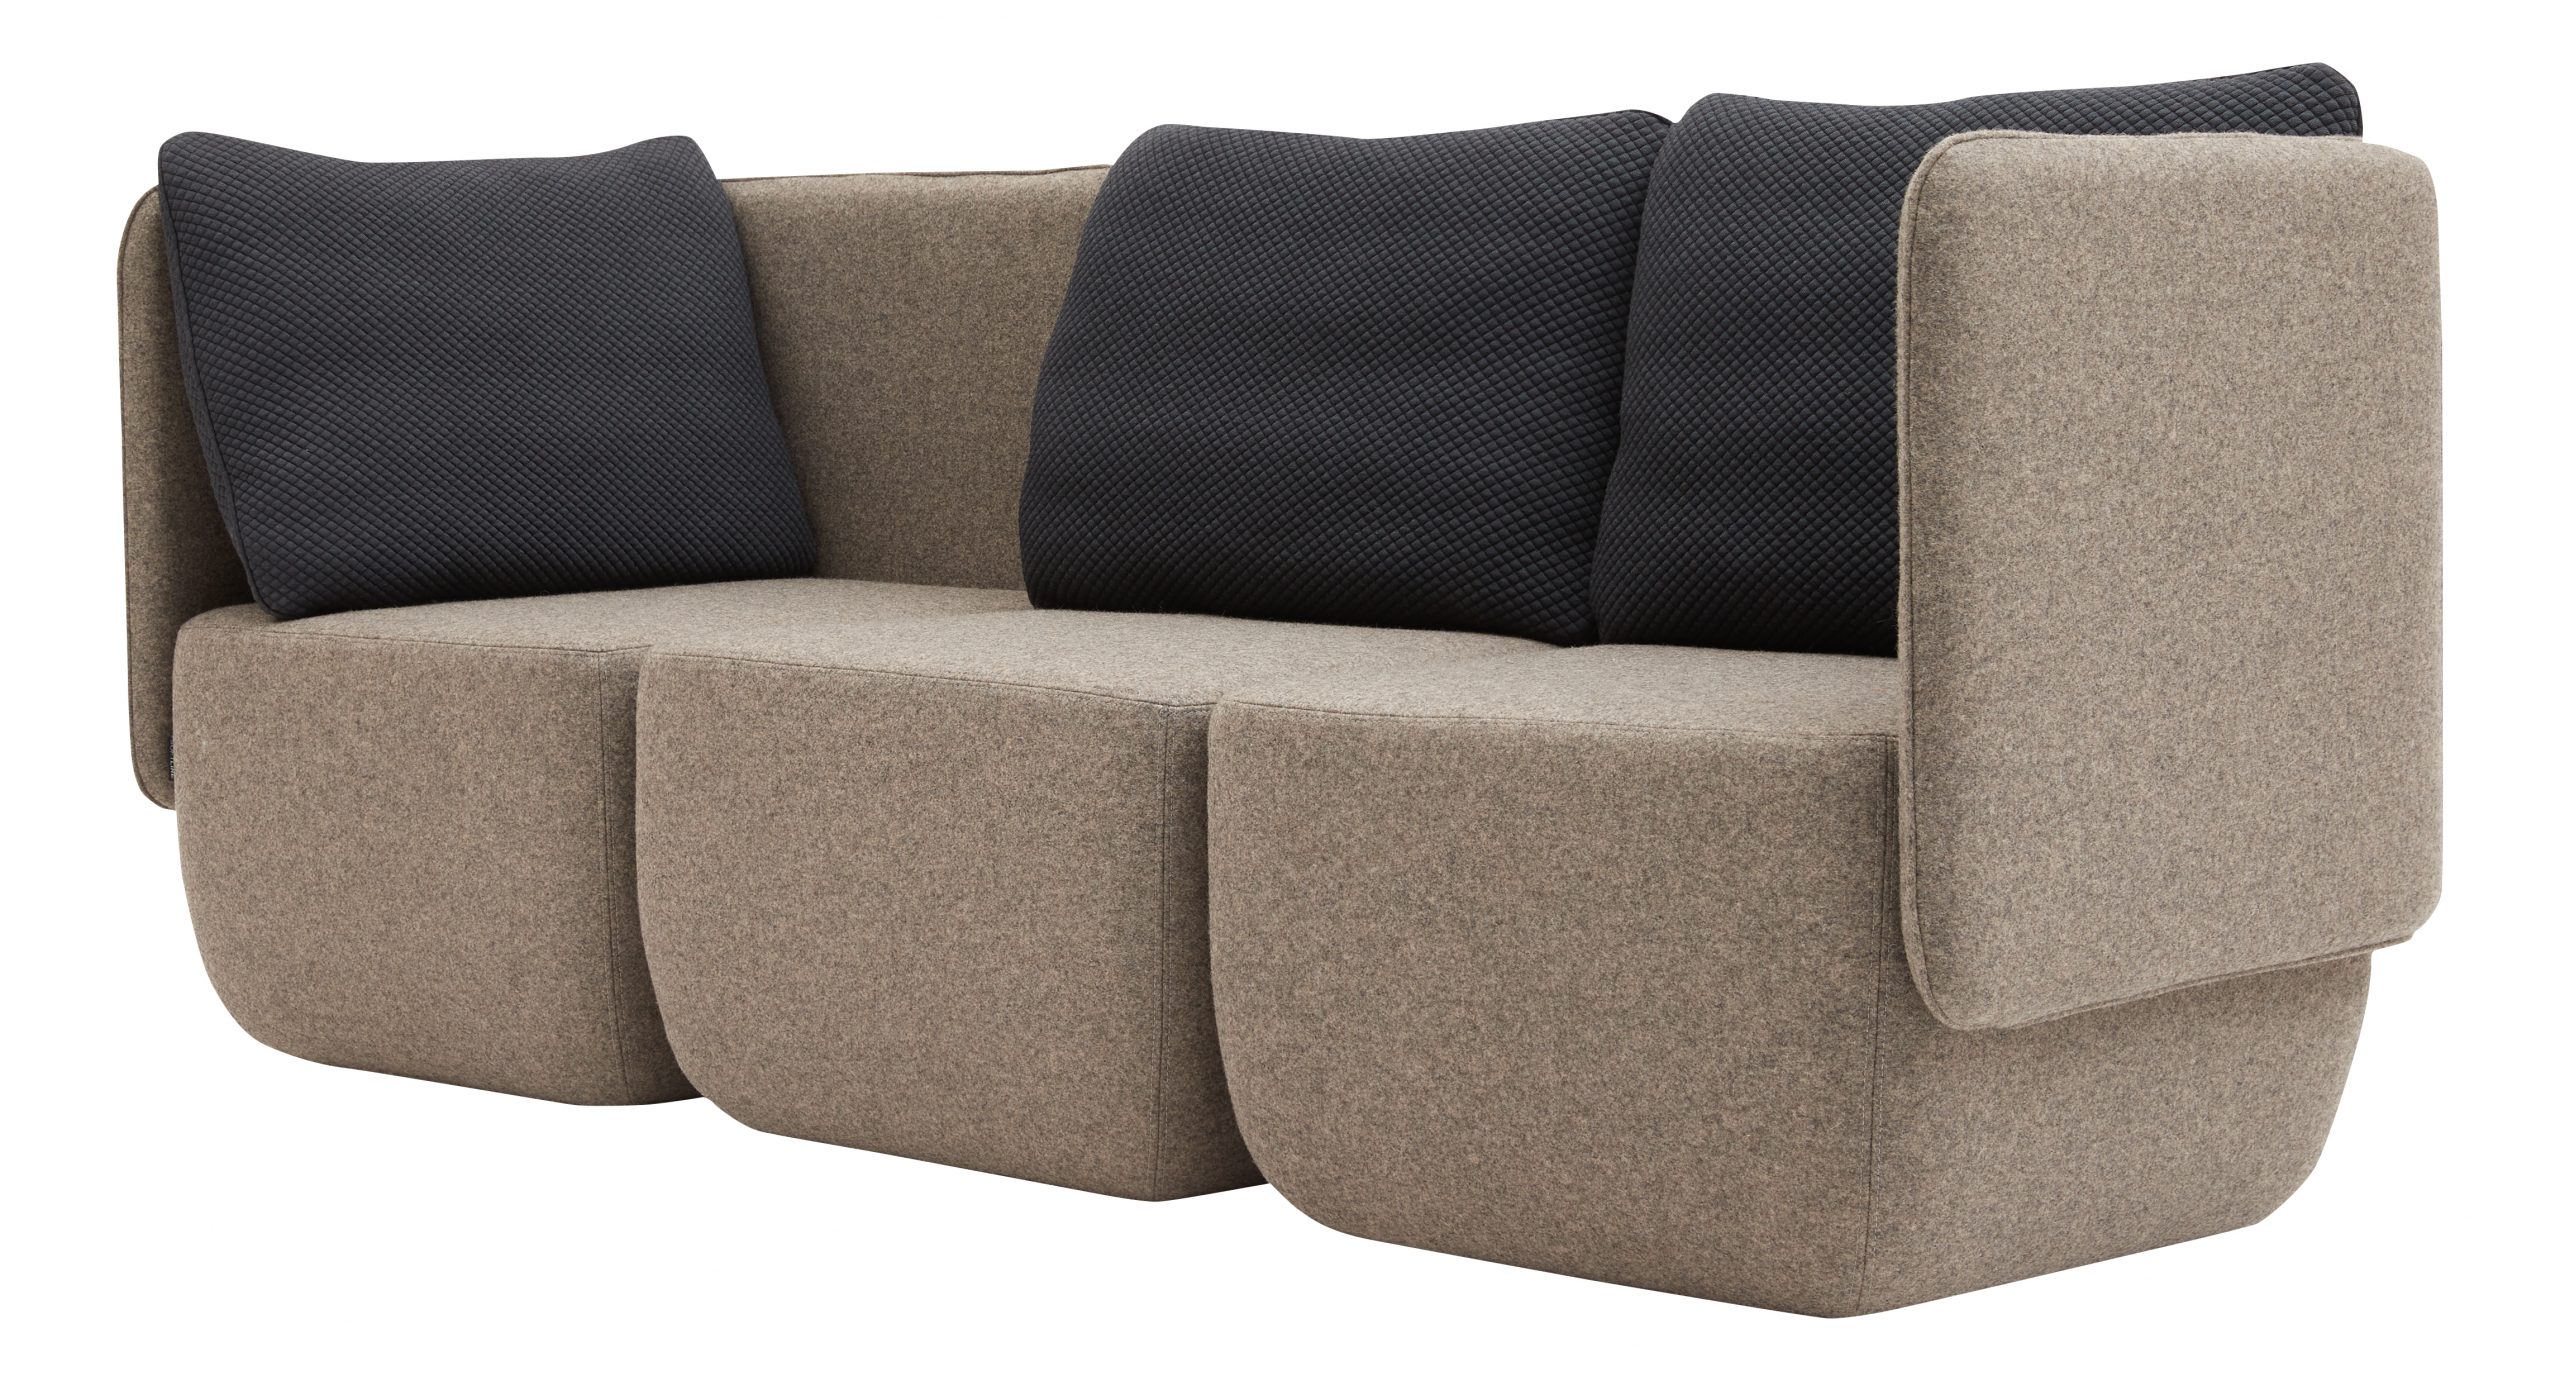 opera-modular-sofa-high-res-13-scaled.jpg